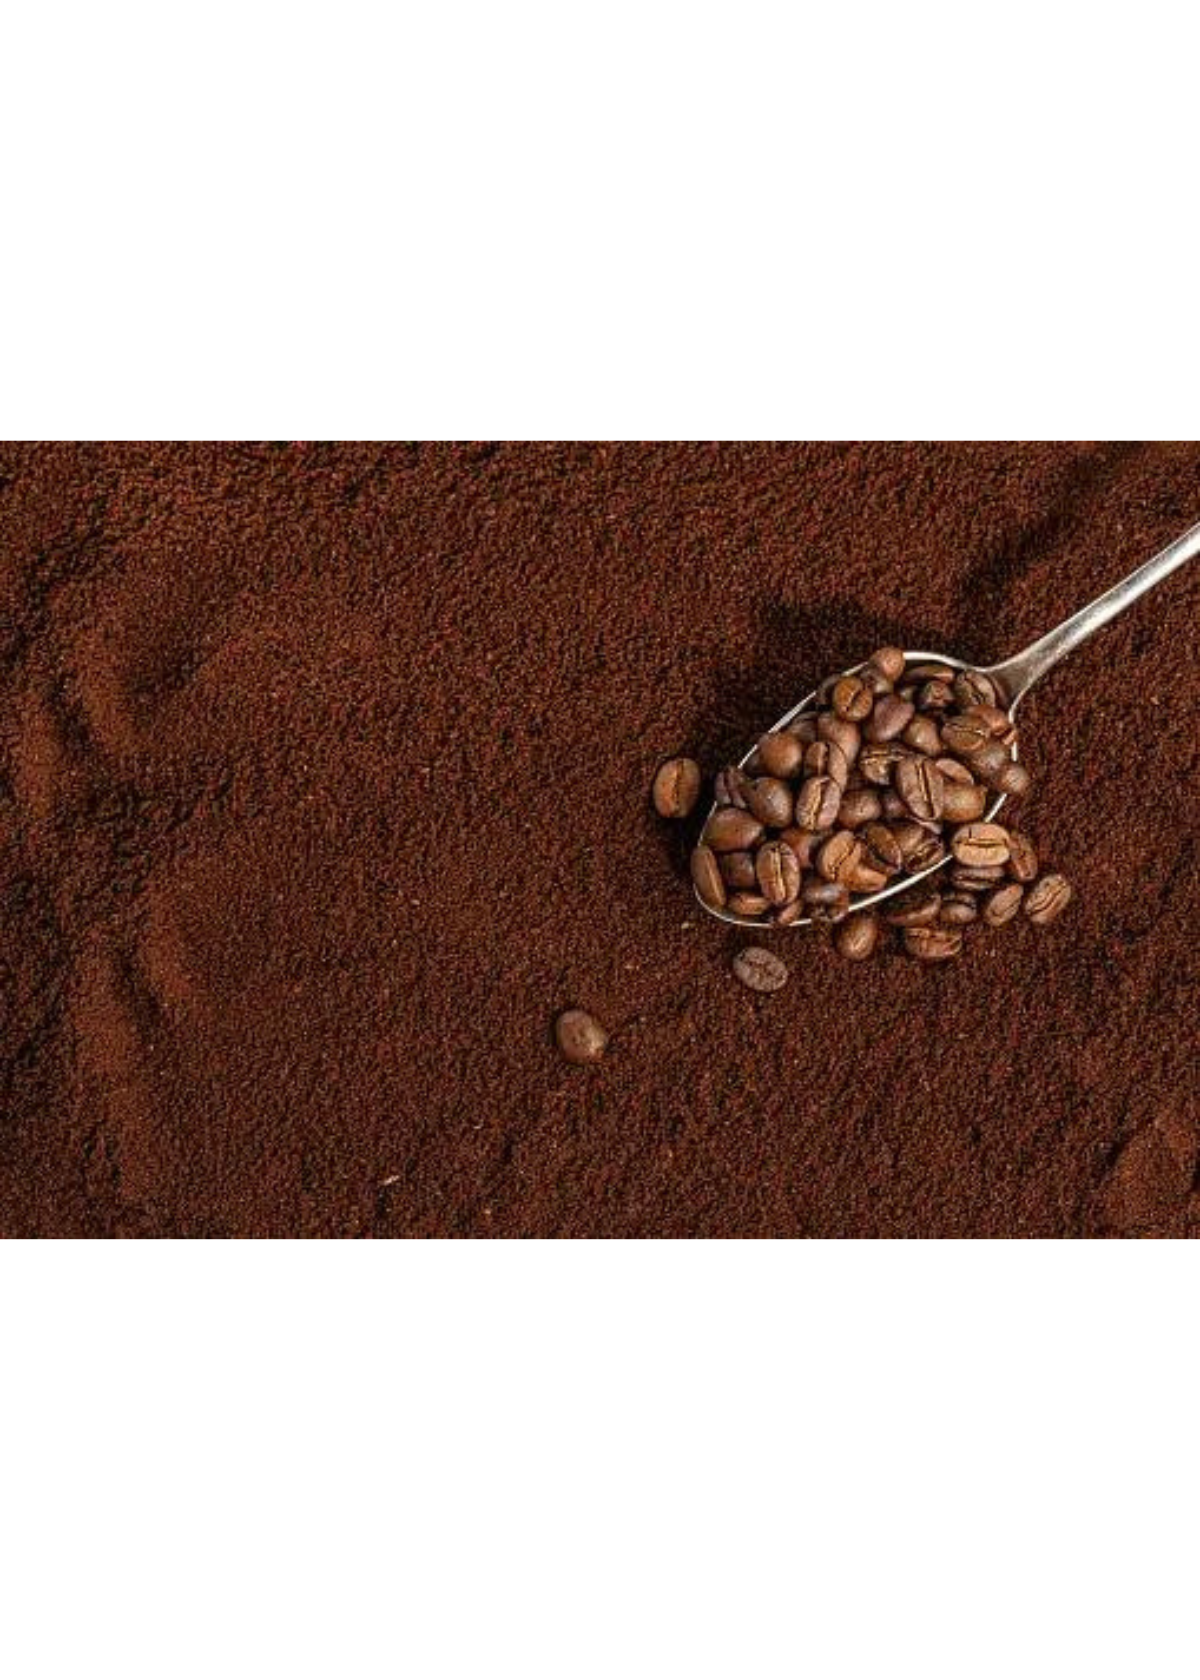 Savor the Flavor: Top 5 Best Ground Coffee Picks Reviewed!